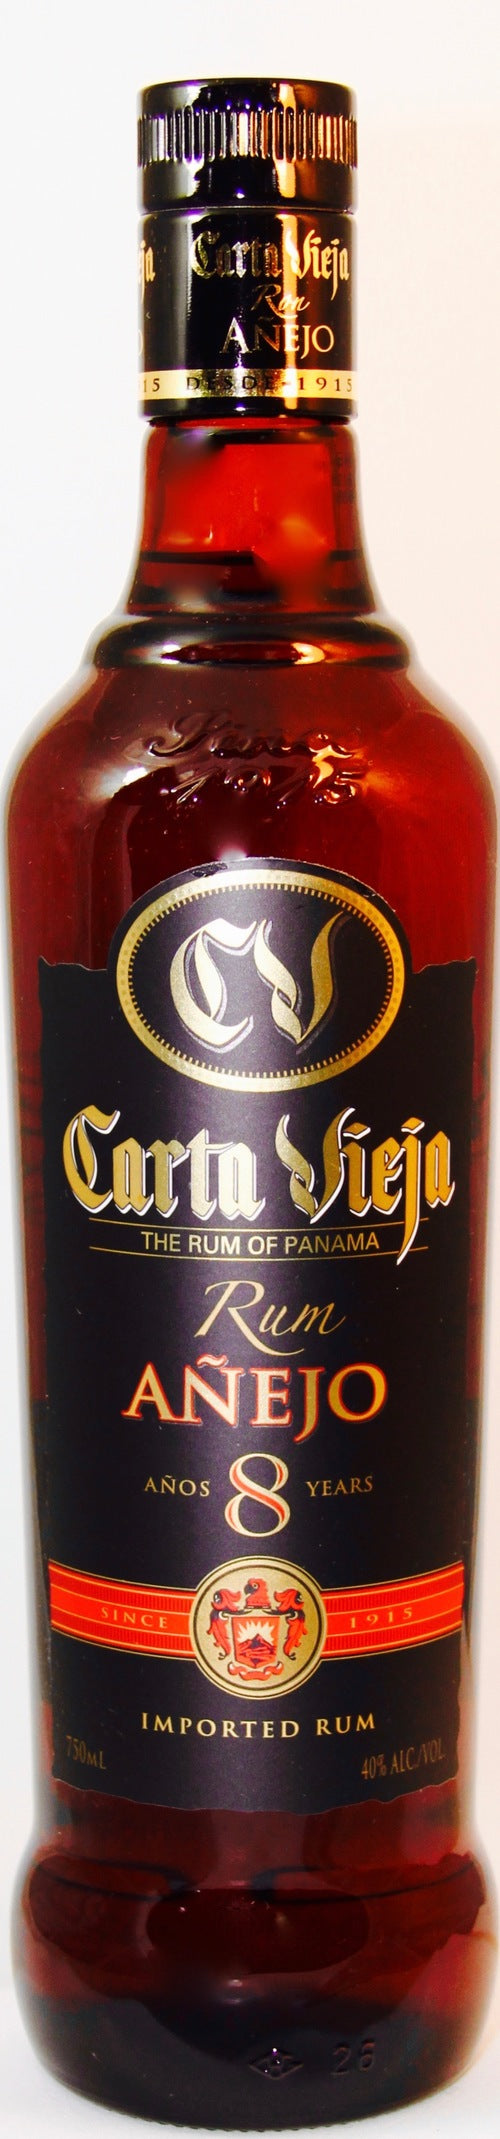 Carta Vieja 8 Year Anejo Rum